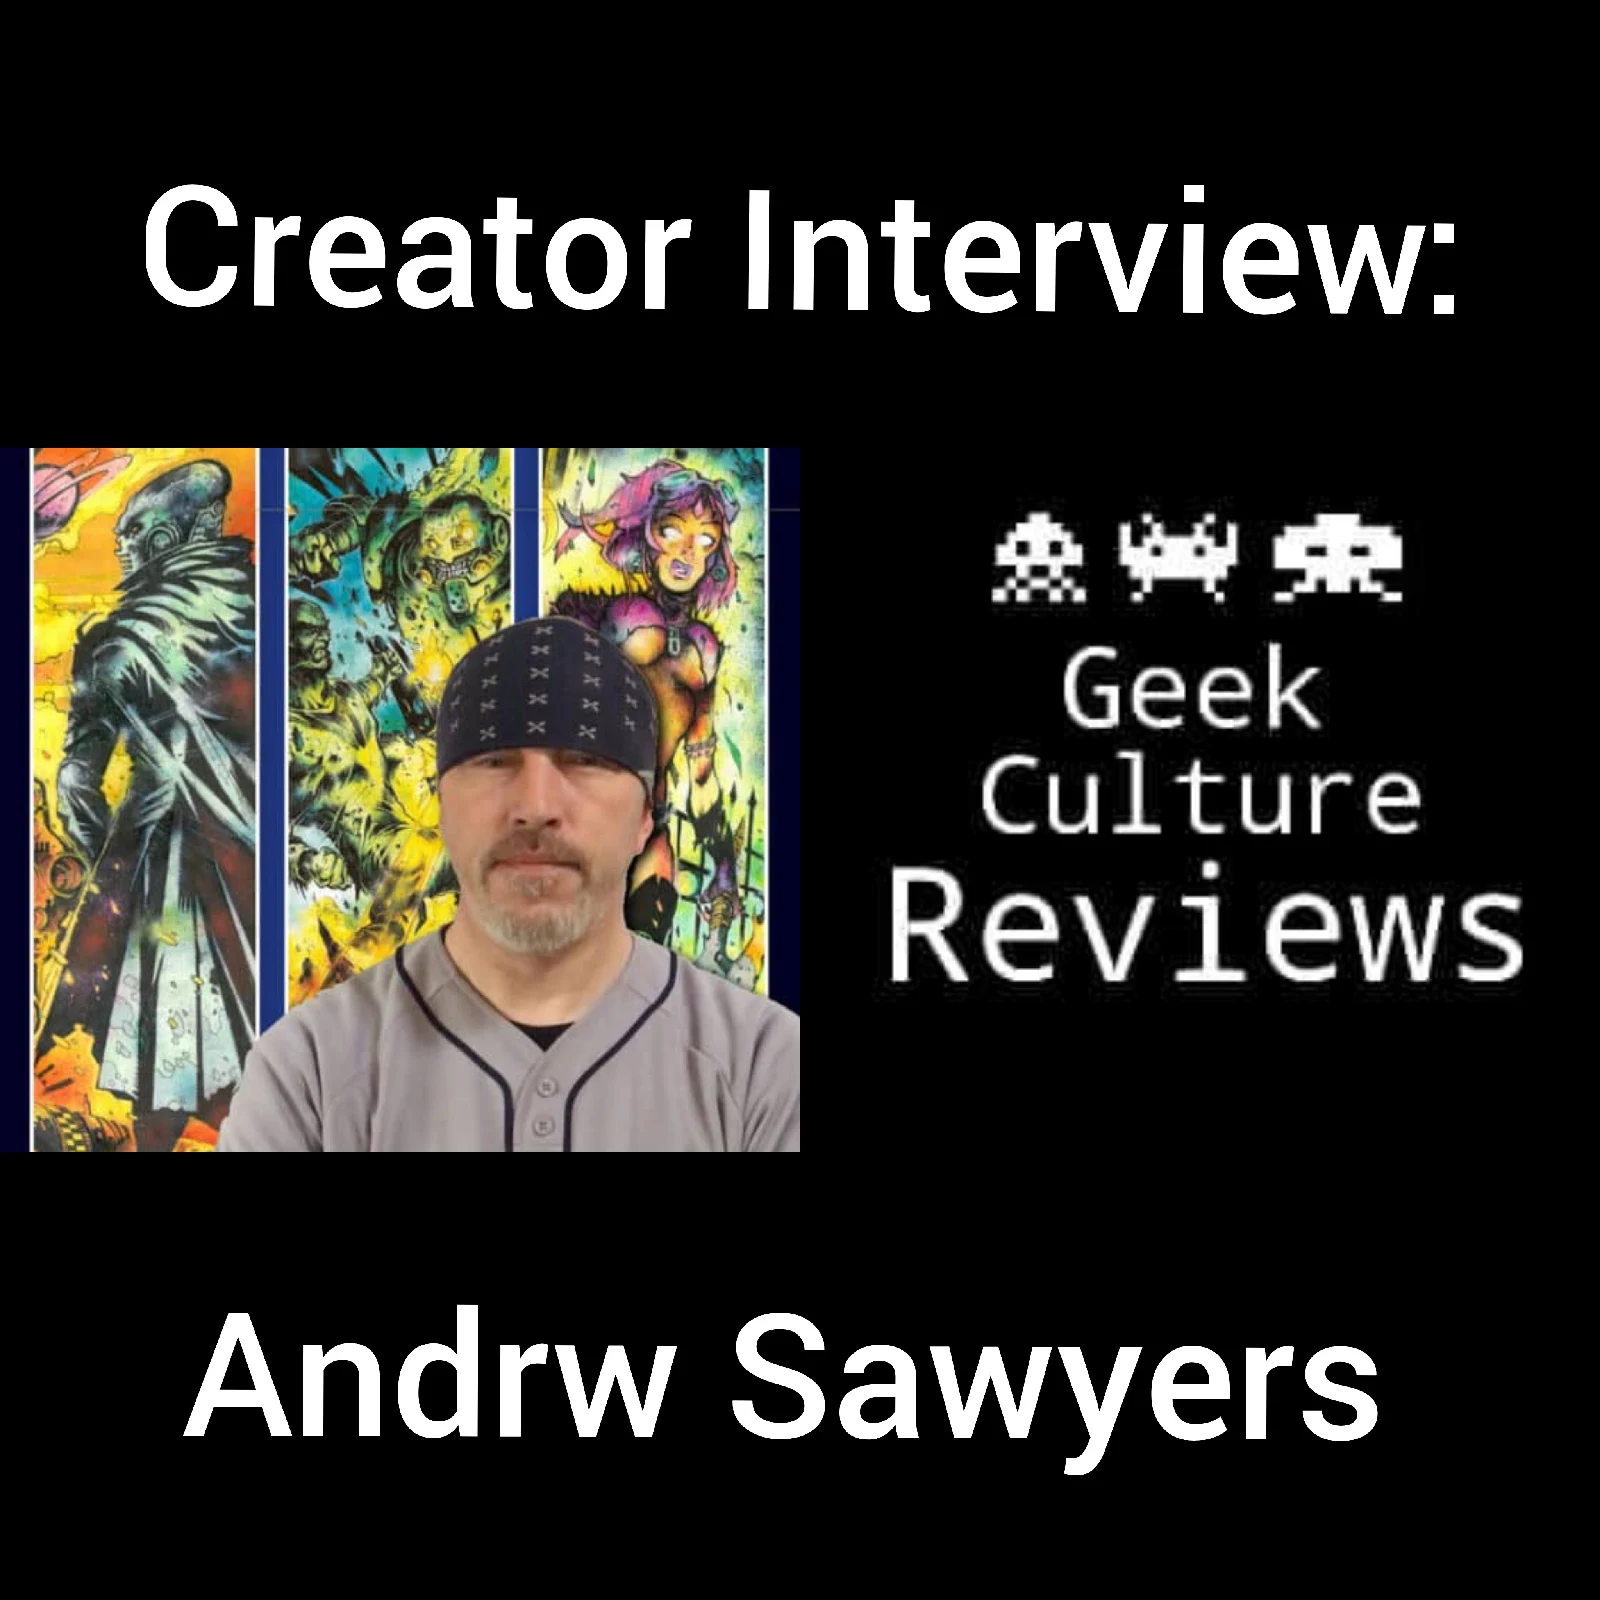 Andrw Sawyers Interview Image